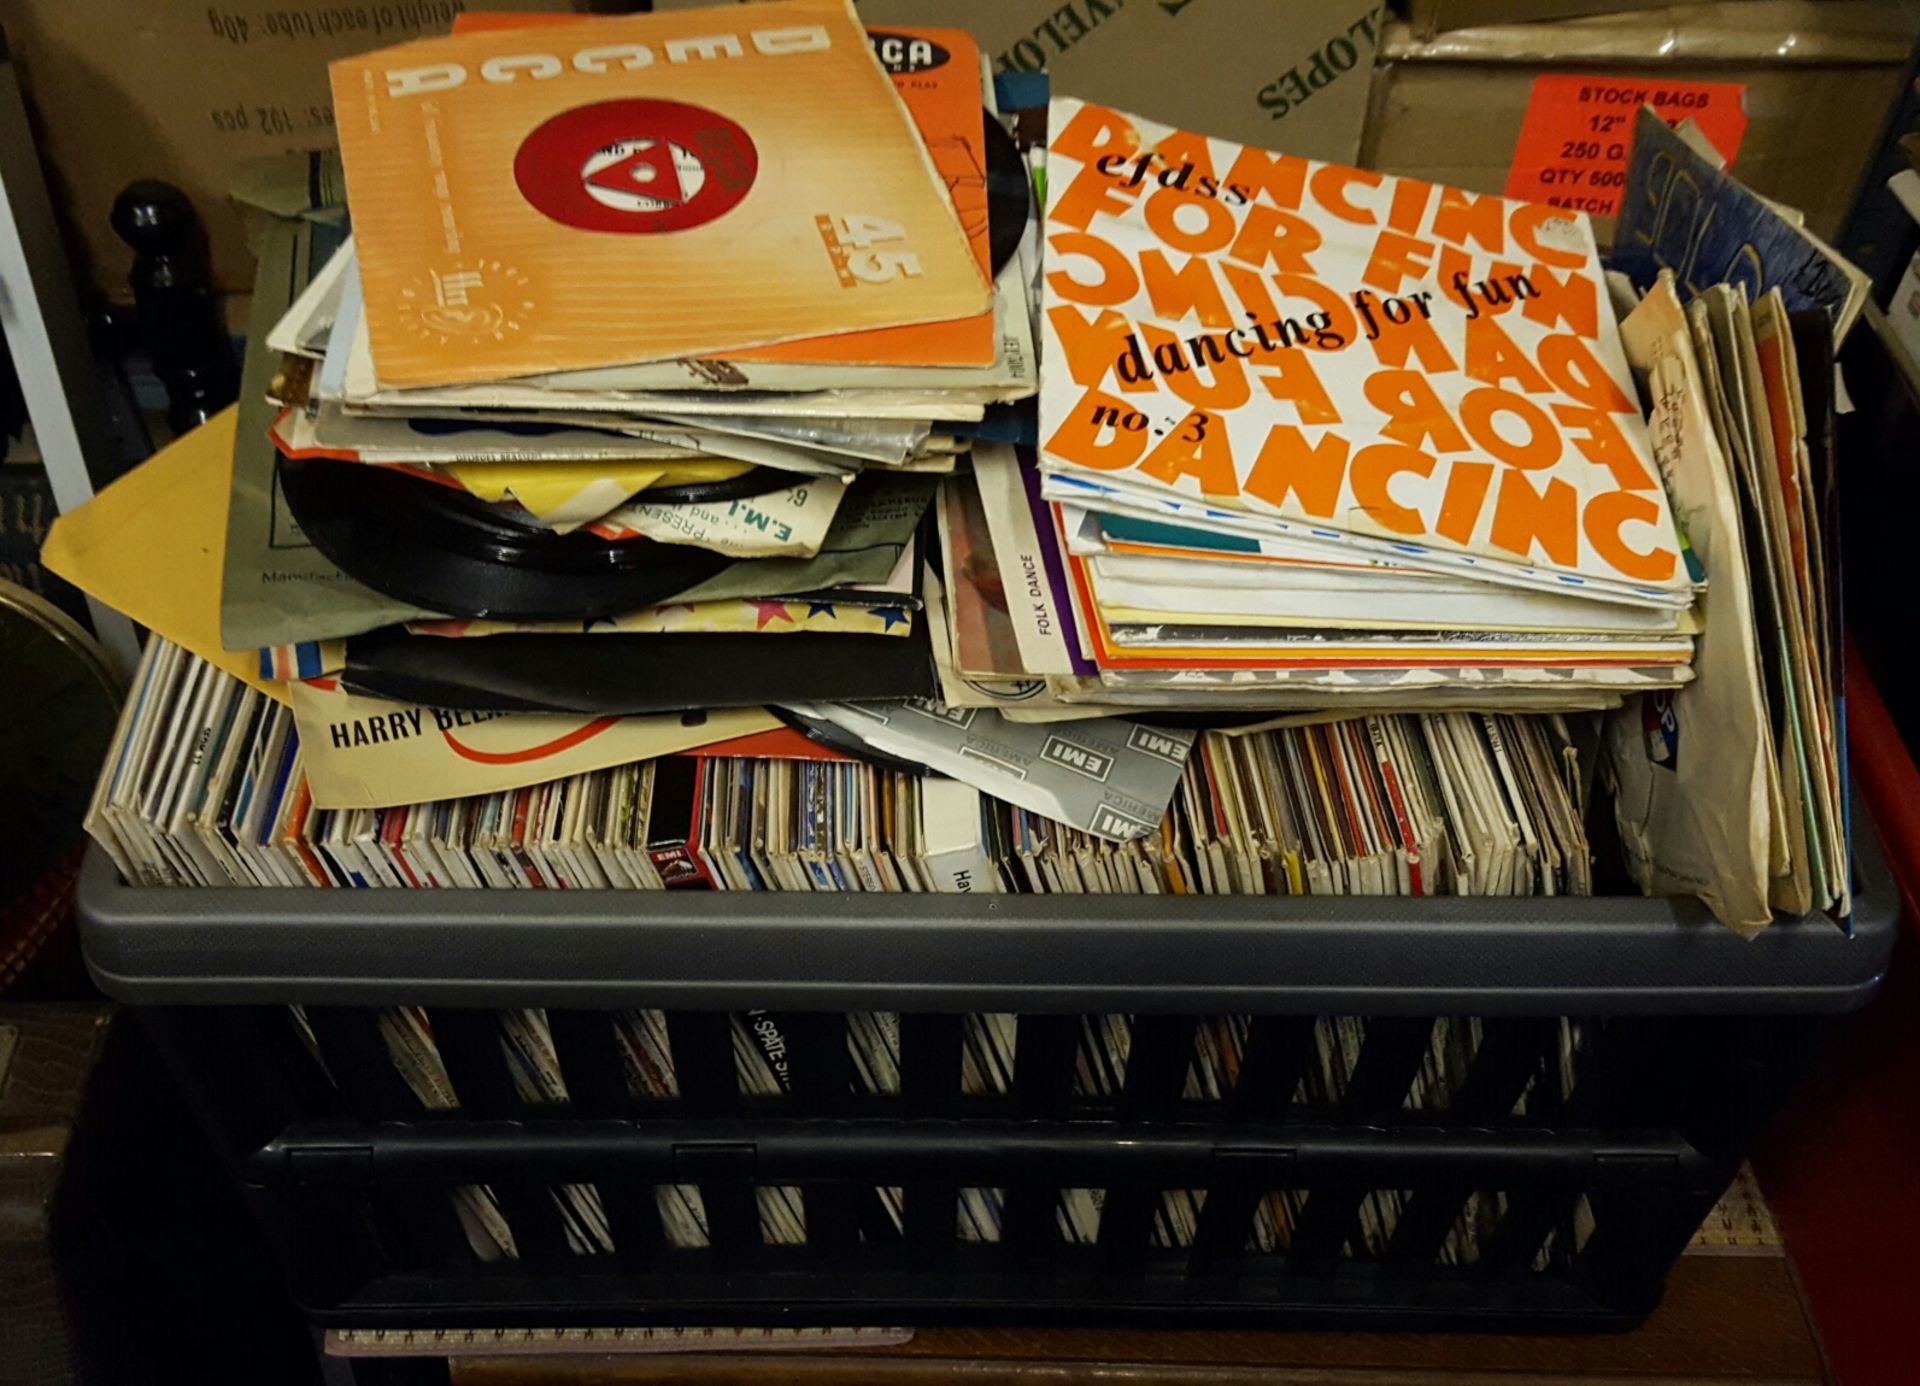 Vinyl Records LP's and Singles